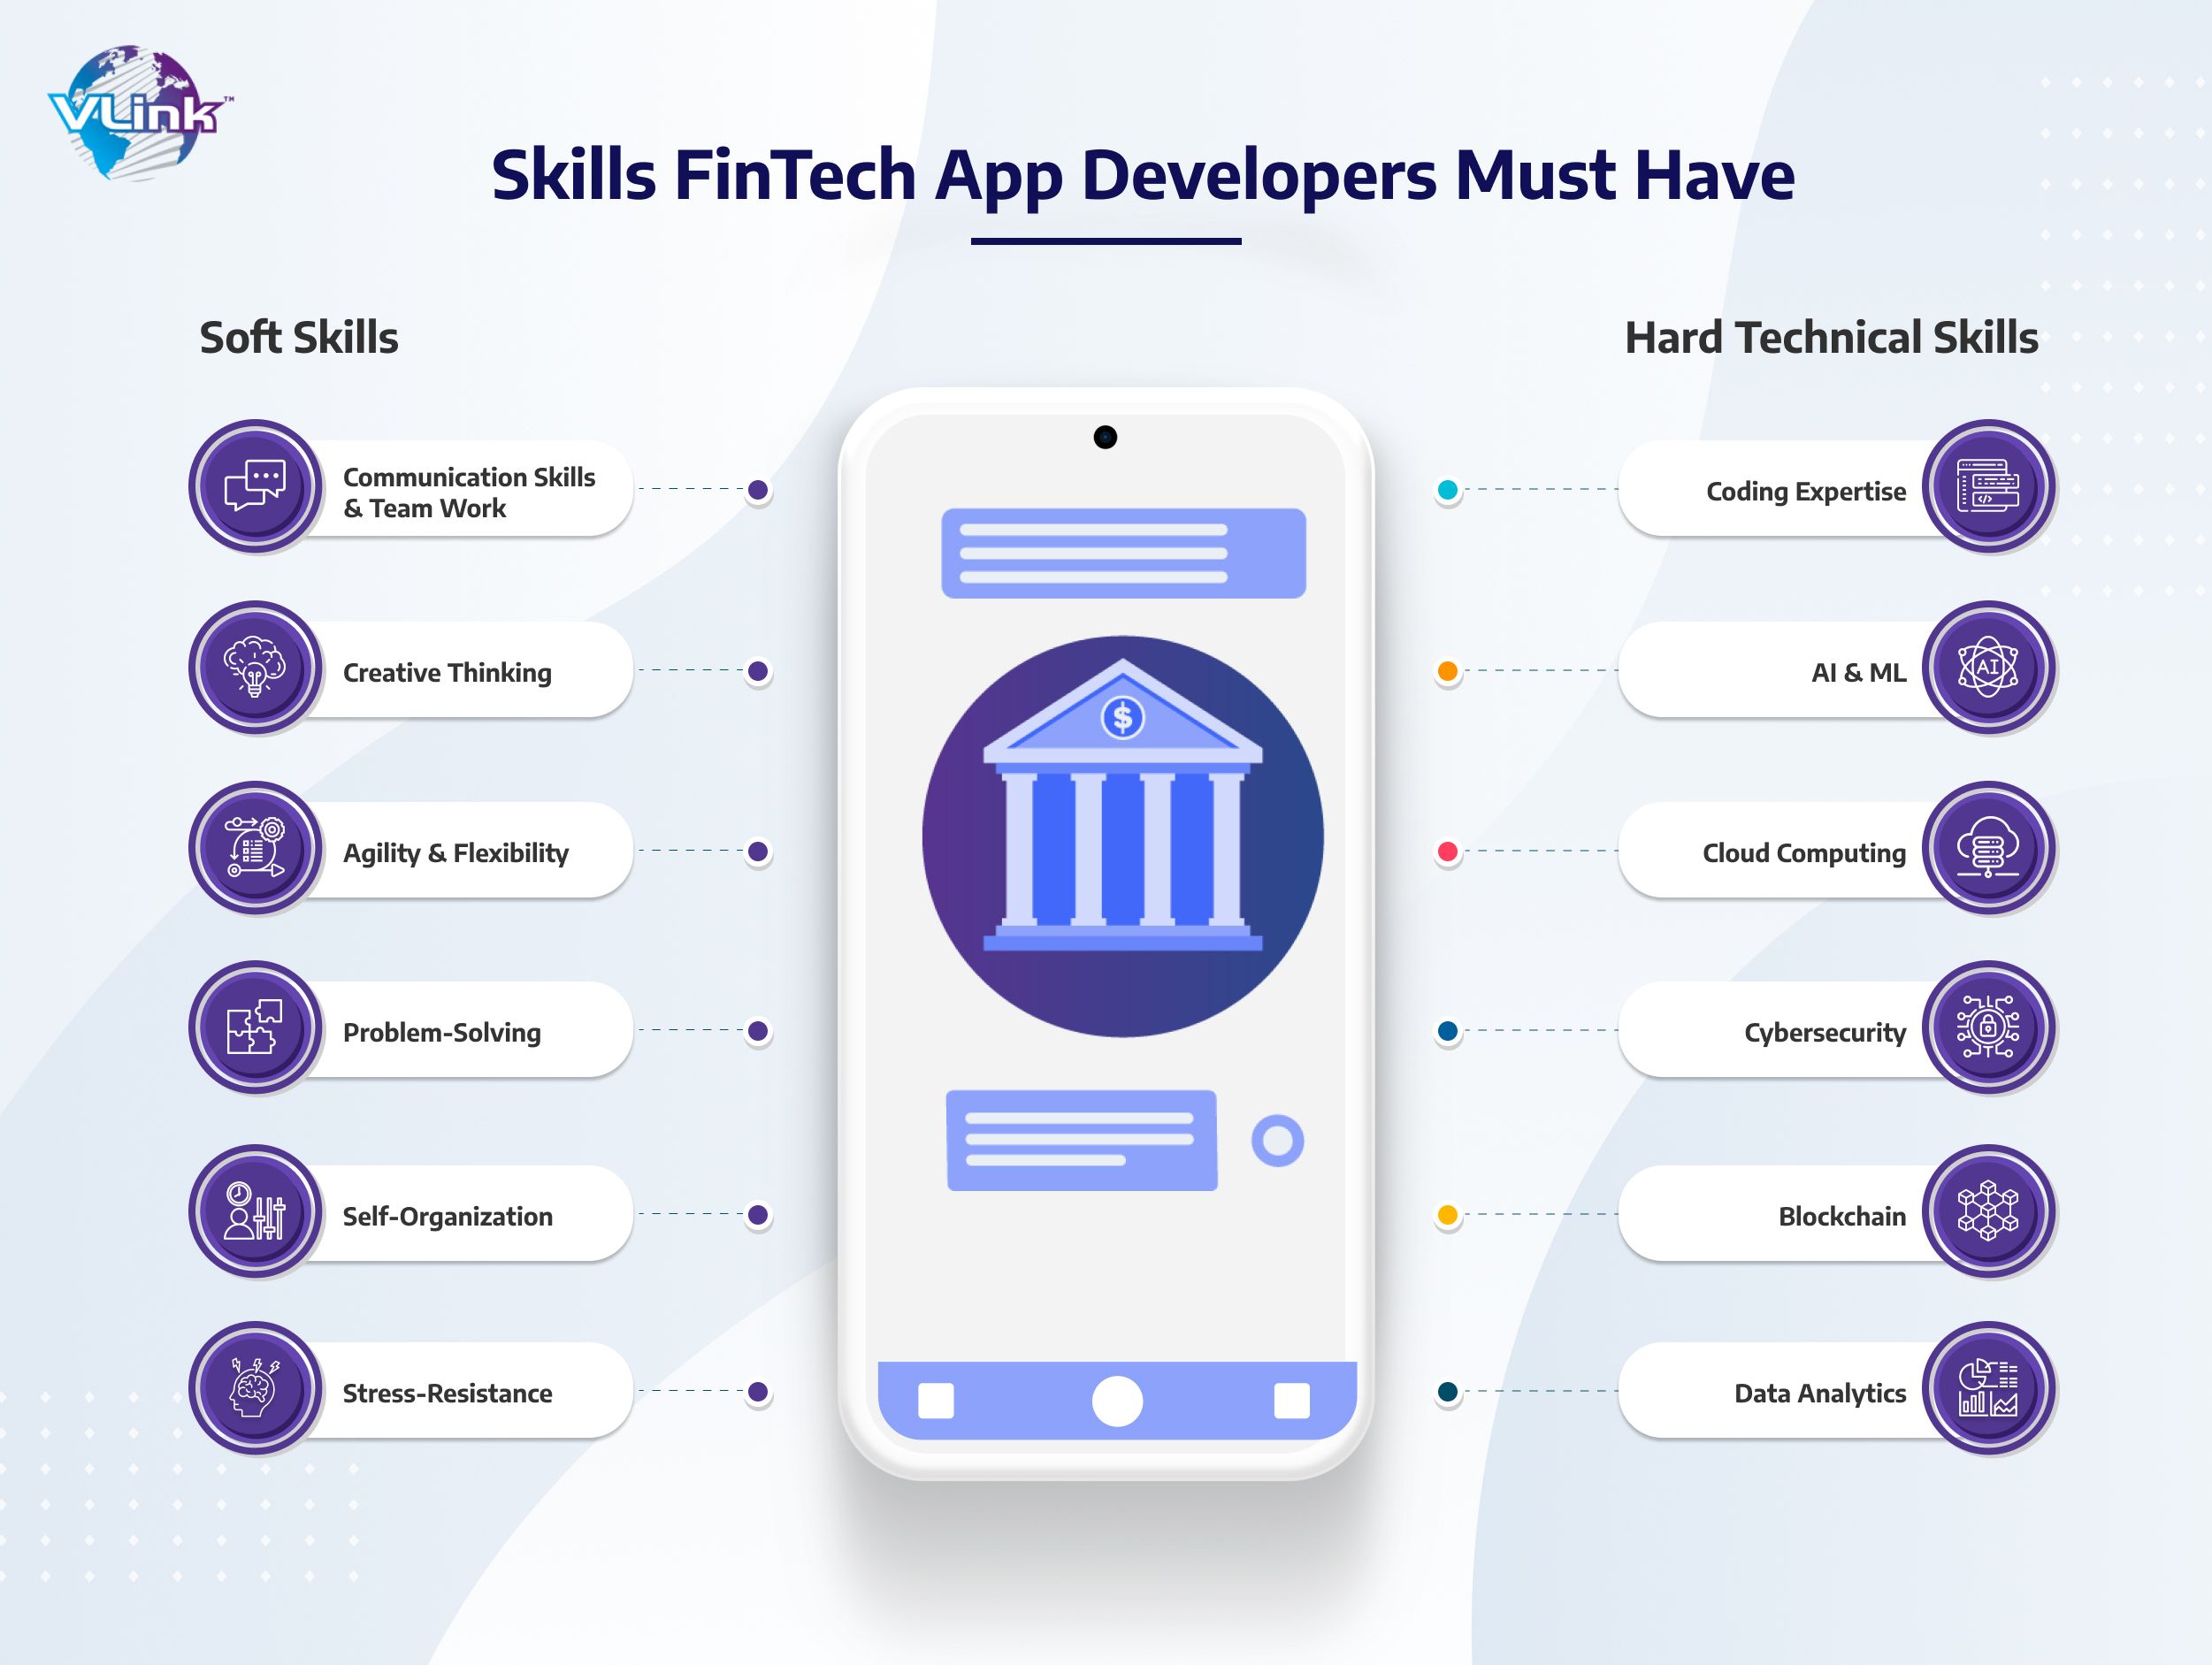 Skills Fintech app developers must have